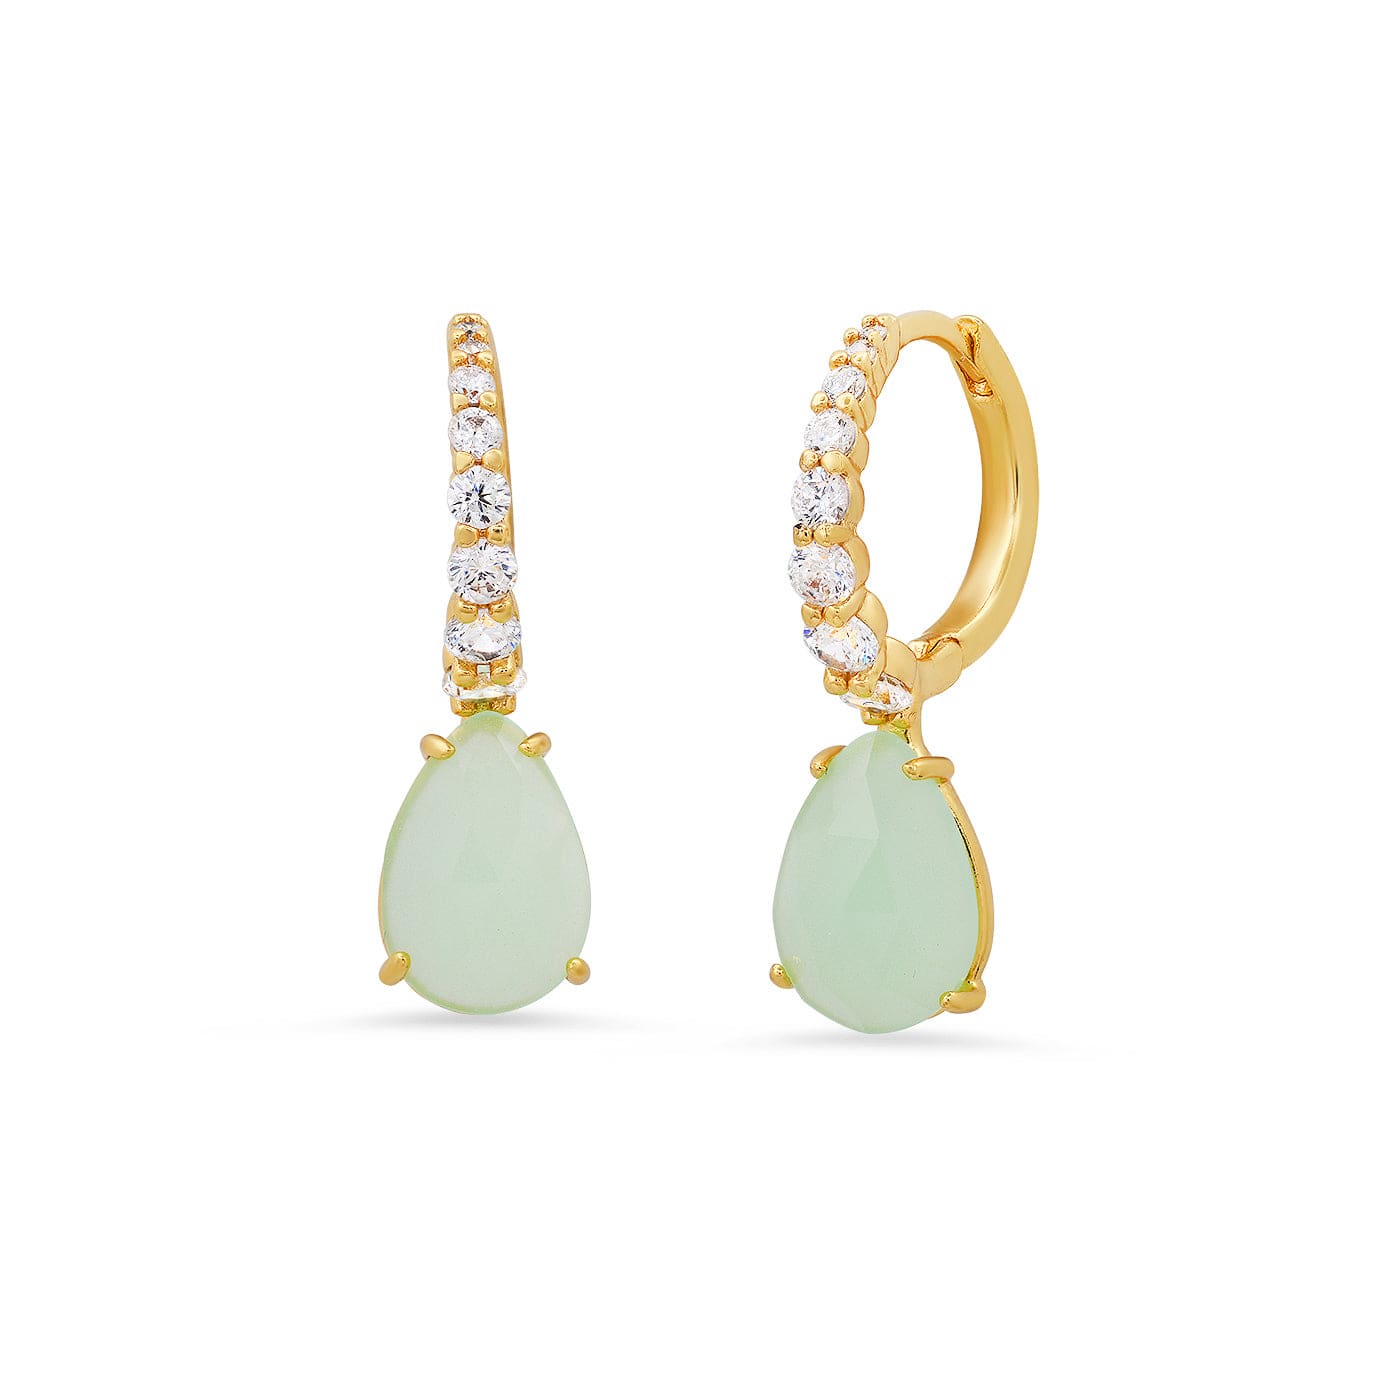 TAI JEWELRY Earrings Mint Pave CZ Huggies with Pear Drop